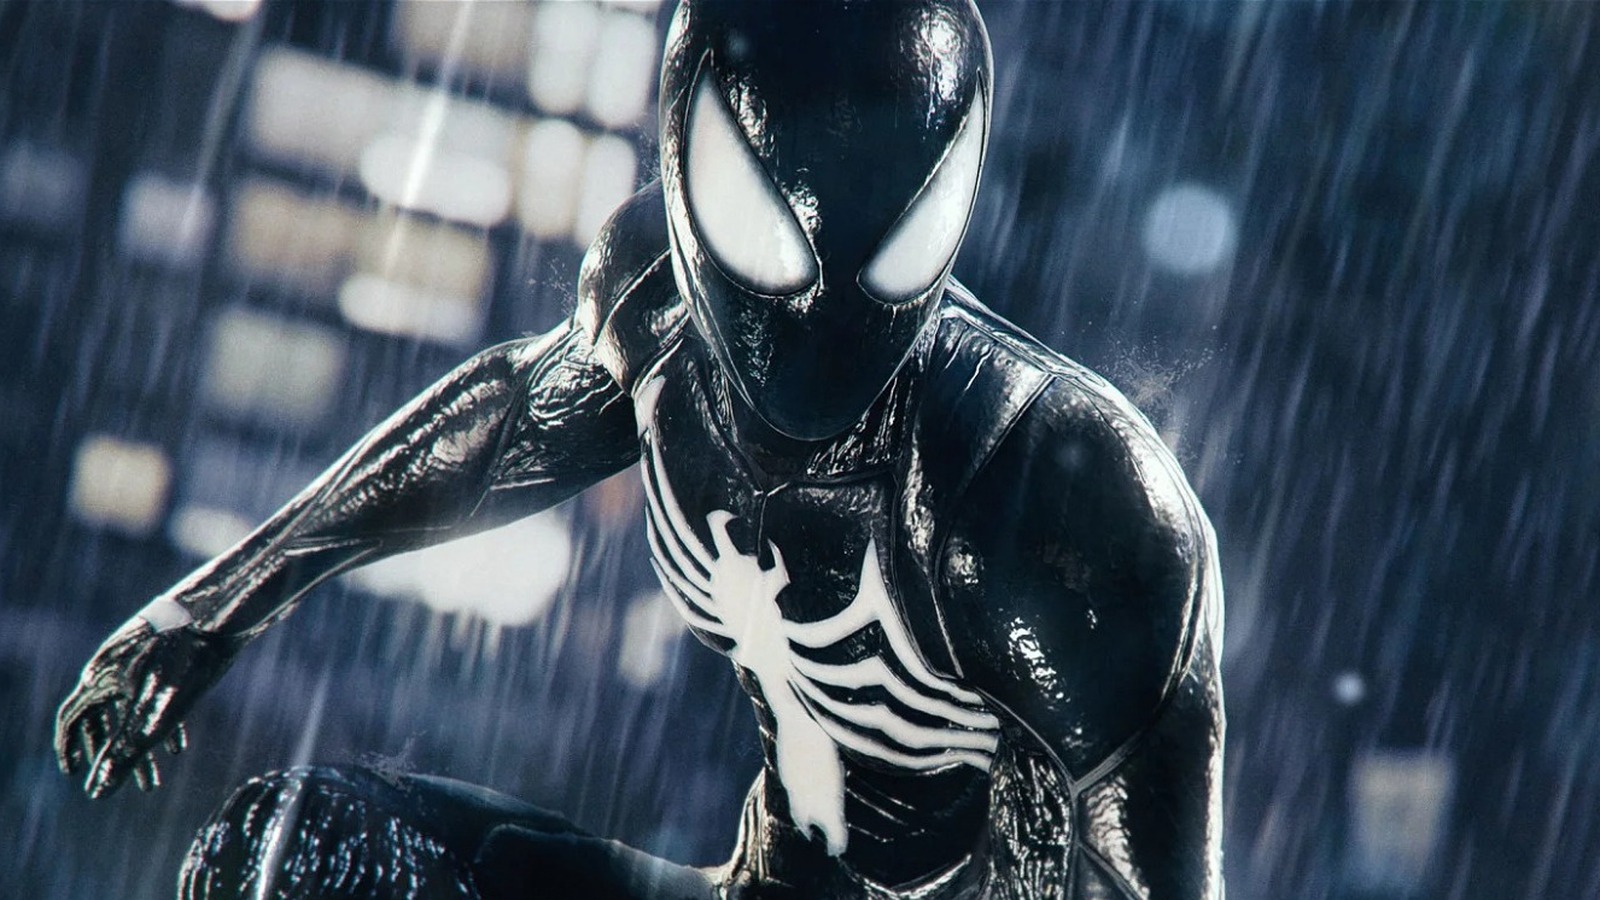 Spider-Man 2 Is Remixing Venom's Greatest Hits - IGN